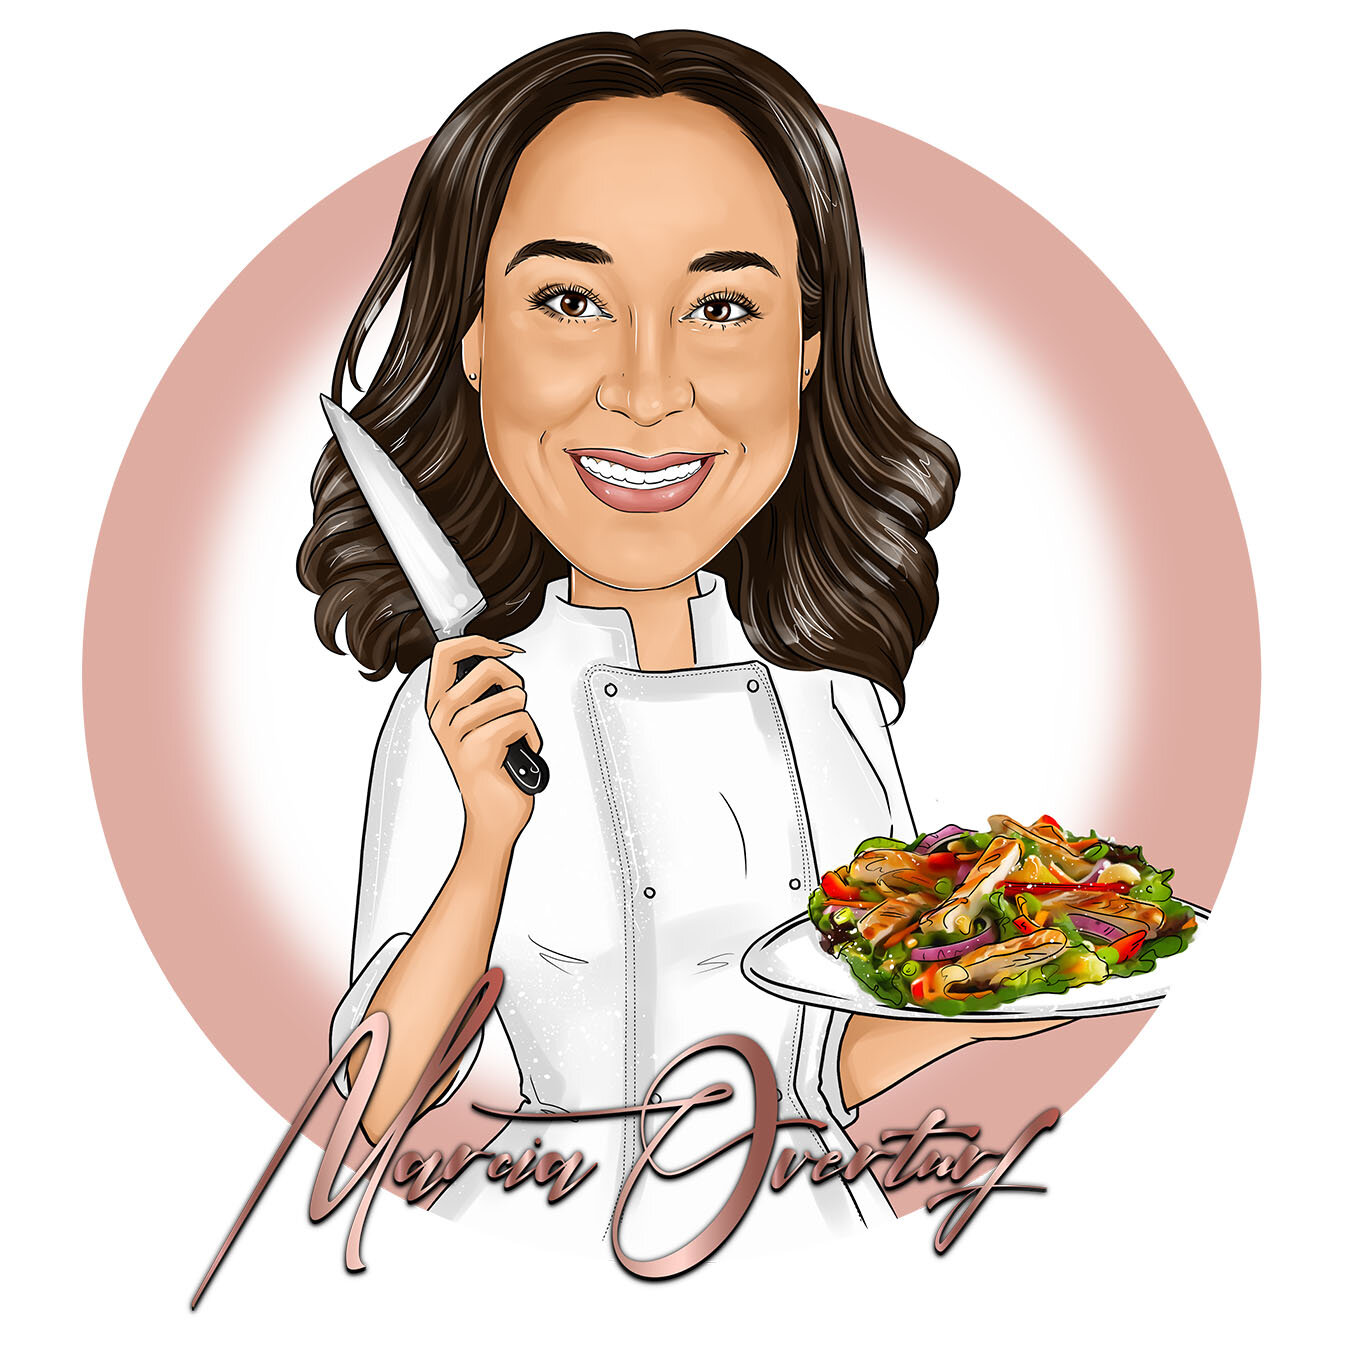 logo for chef-portrait logo for chef-chef logo.jpg